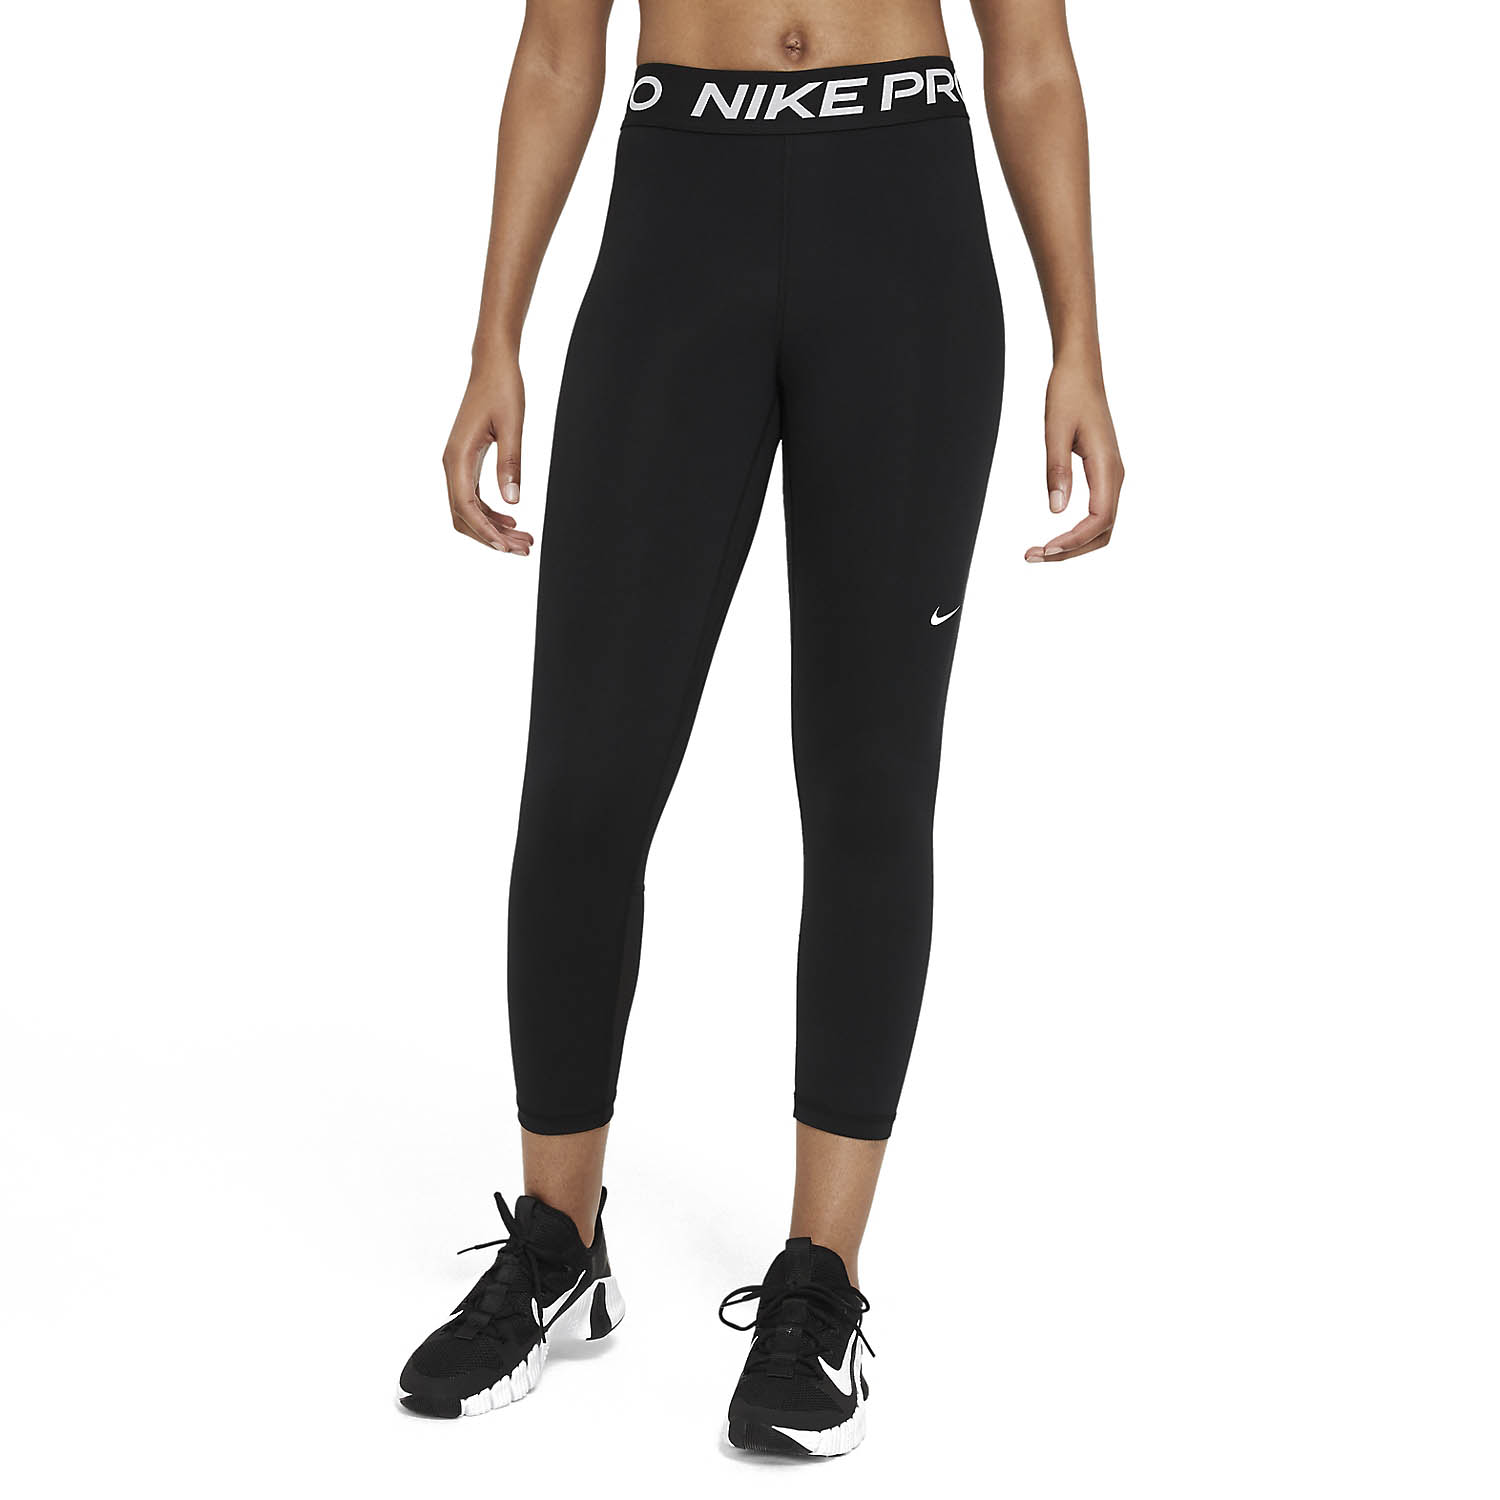 Nike Pro 365 Women's Training Tights - Black/White